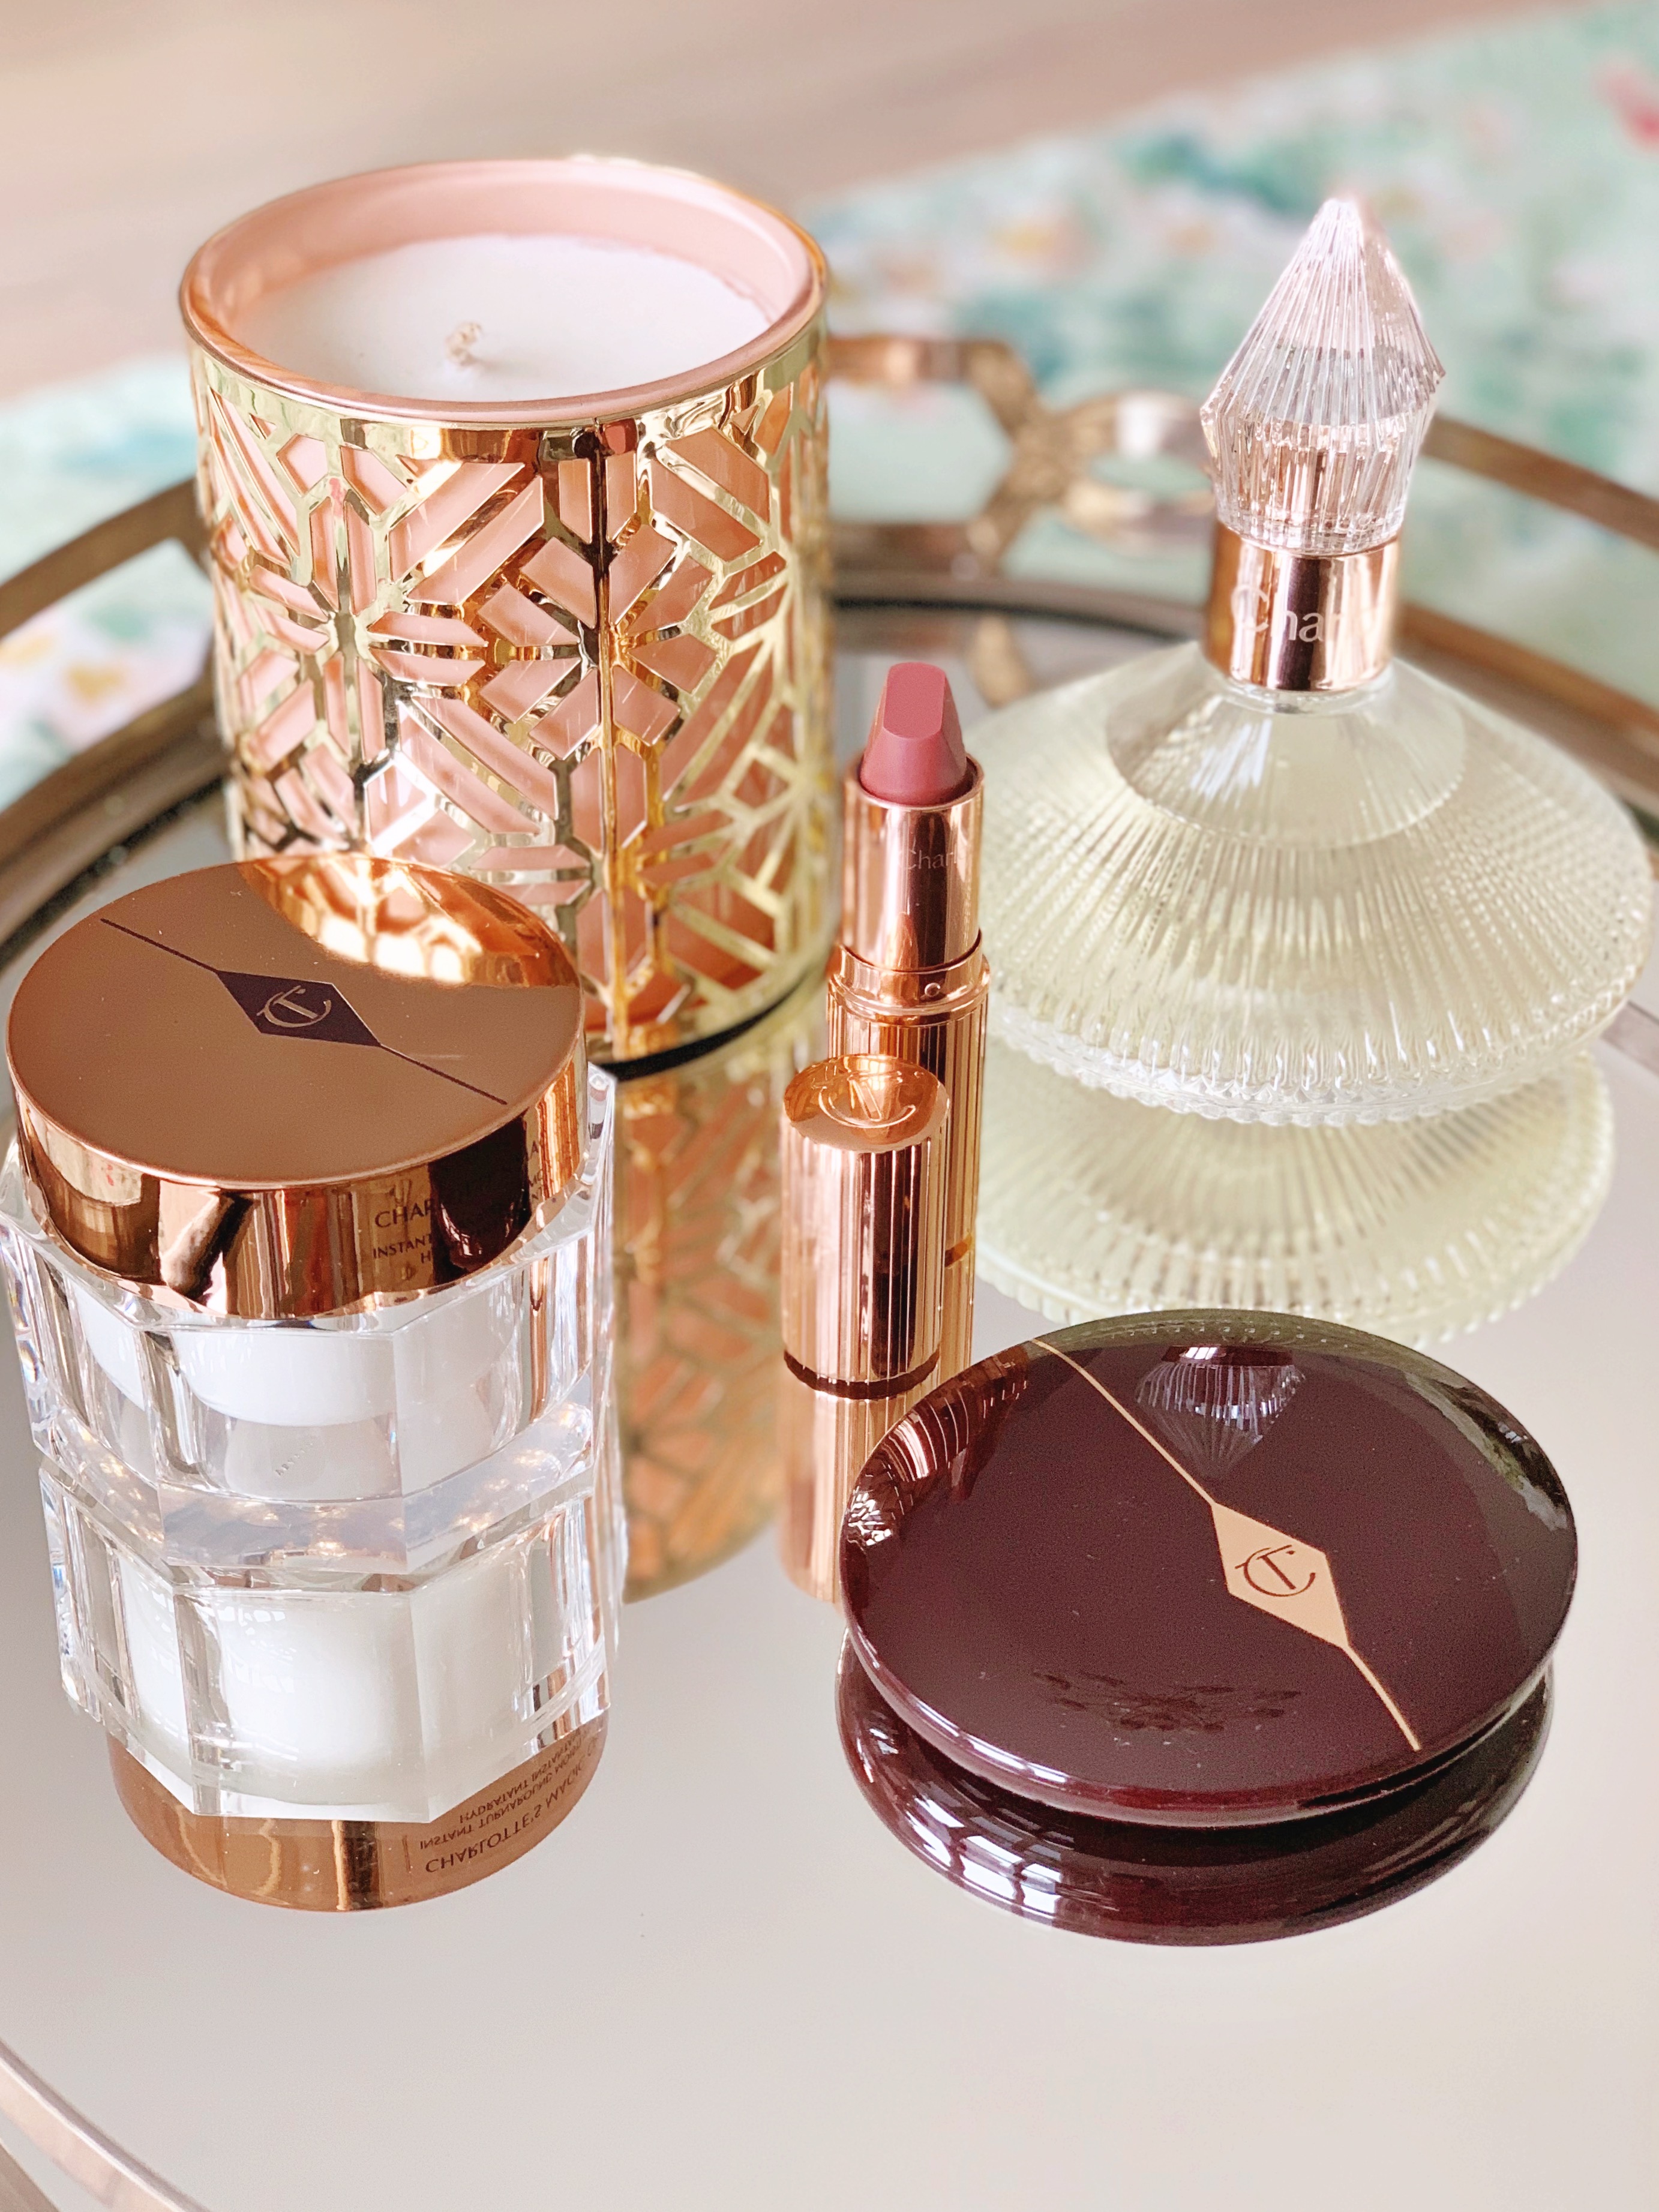 Charlotte Tilbury perfume skincare makeup cream lipstick and blush powder